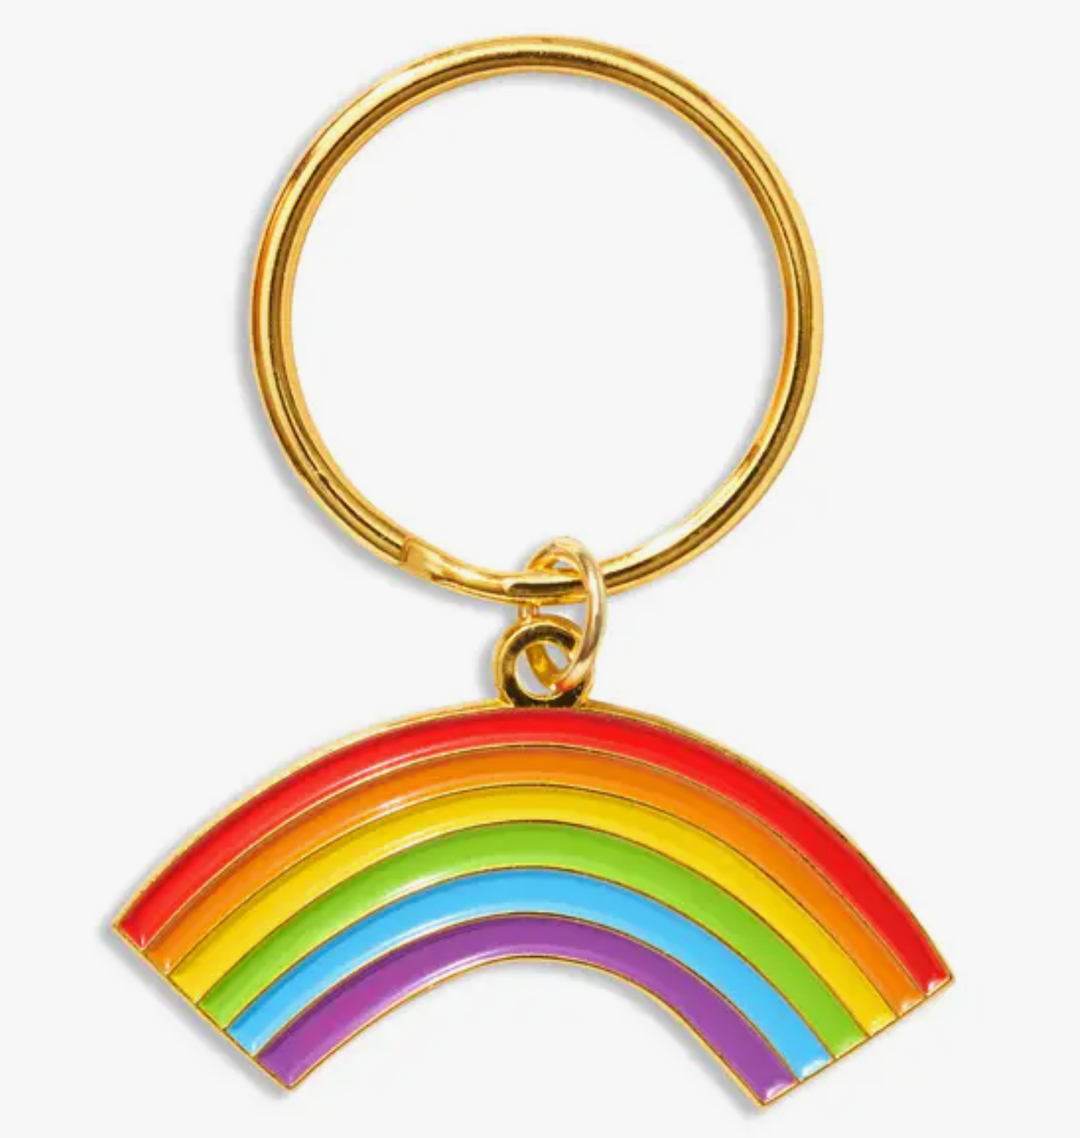 The Found- Rainbow Keychain